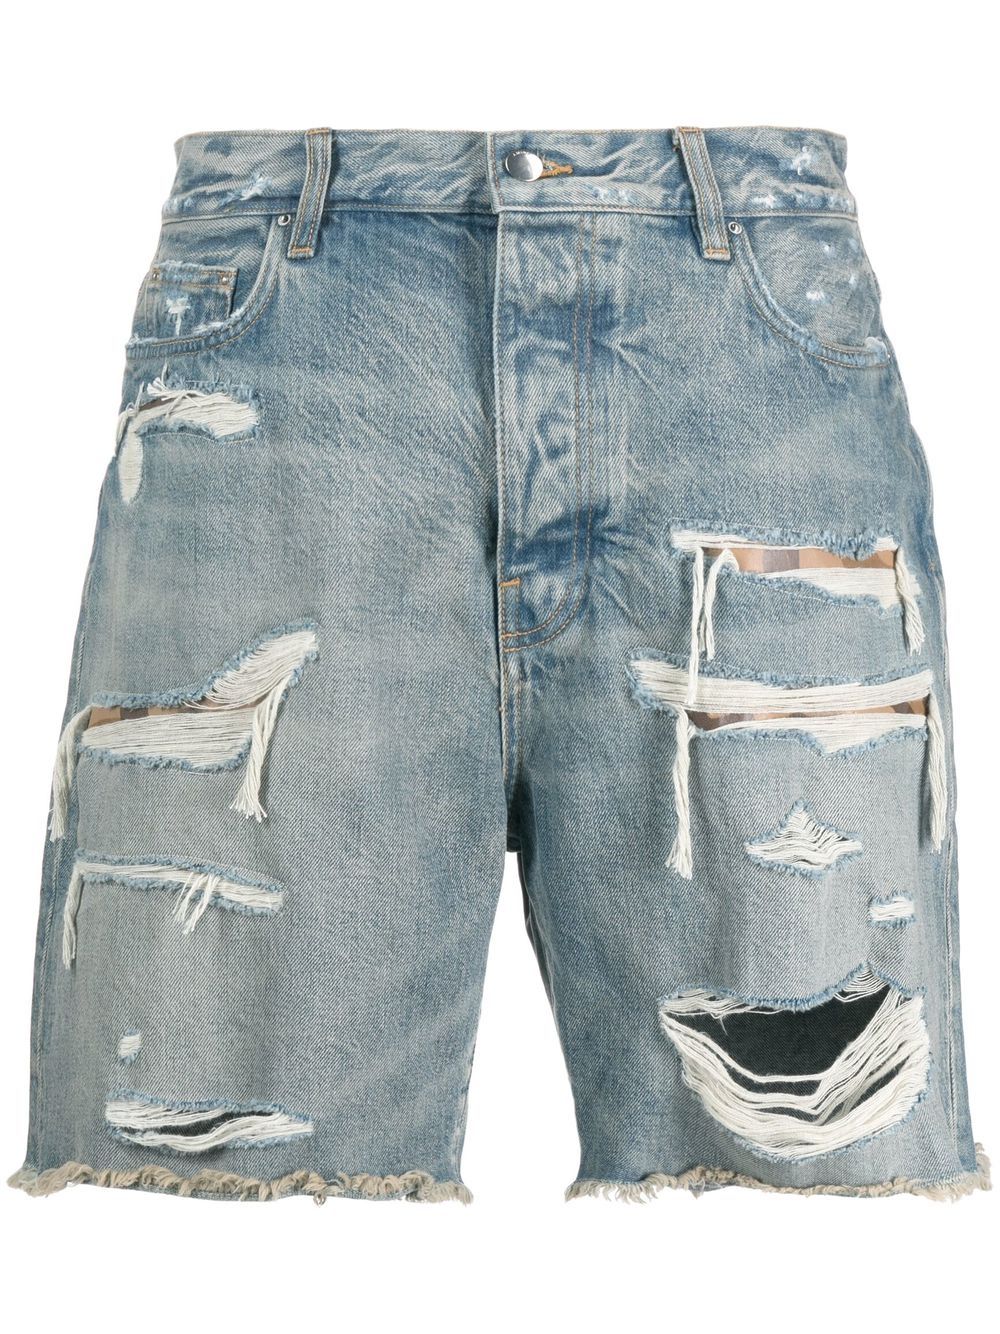 AMIRI Jeans-Shorts im Distressed-Look - Blau